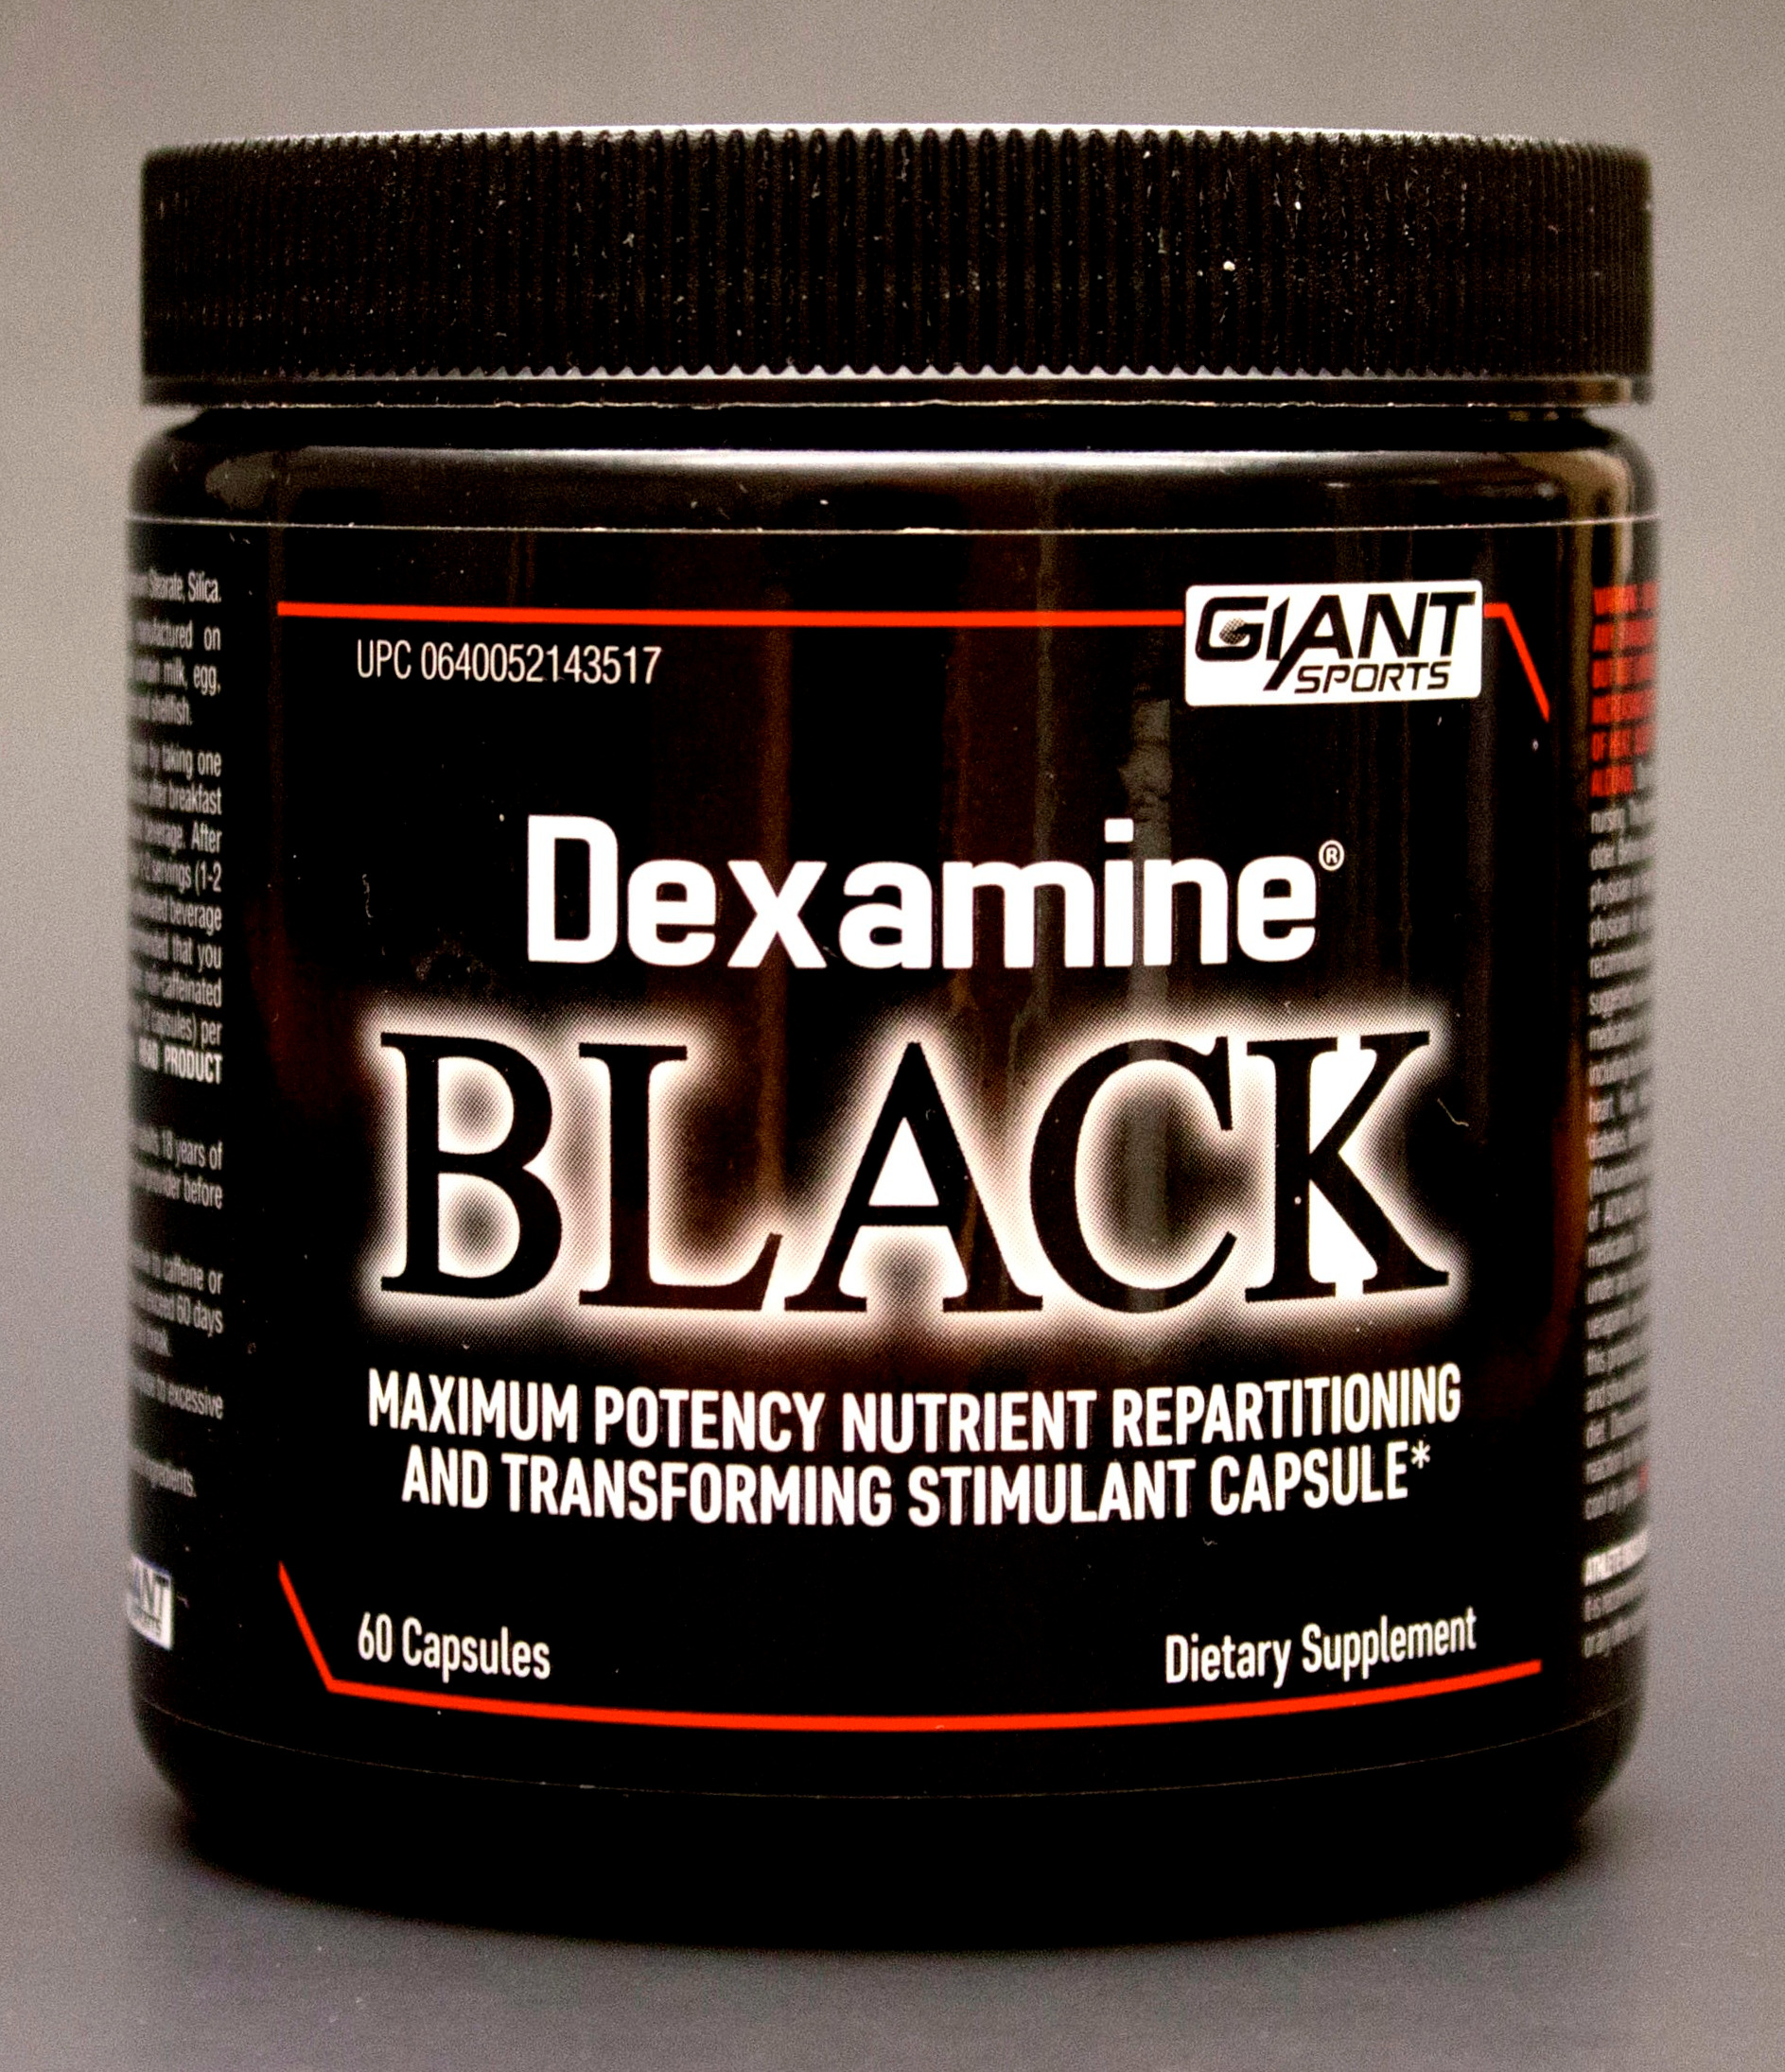 Dexamine Black